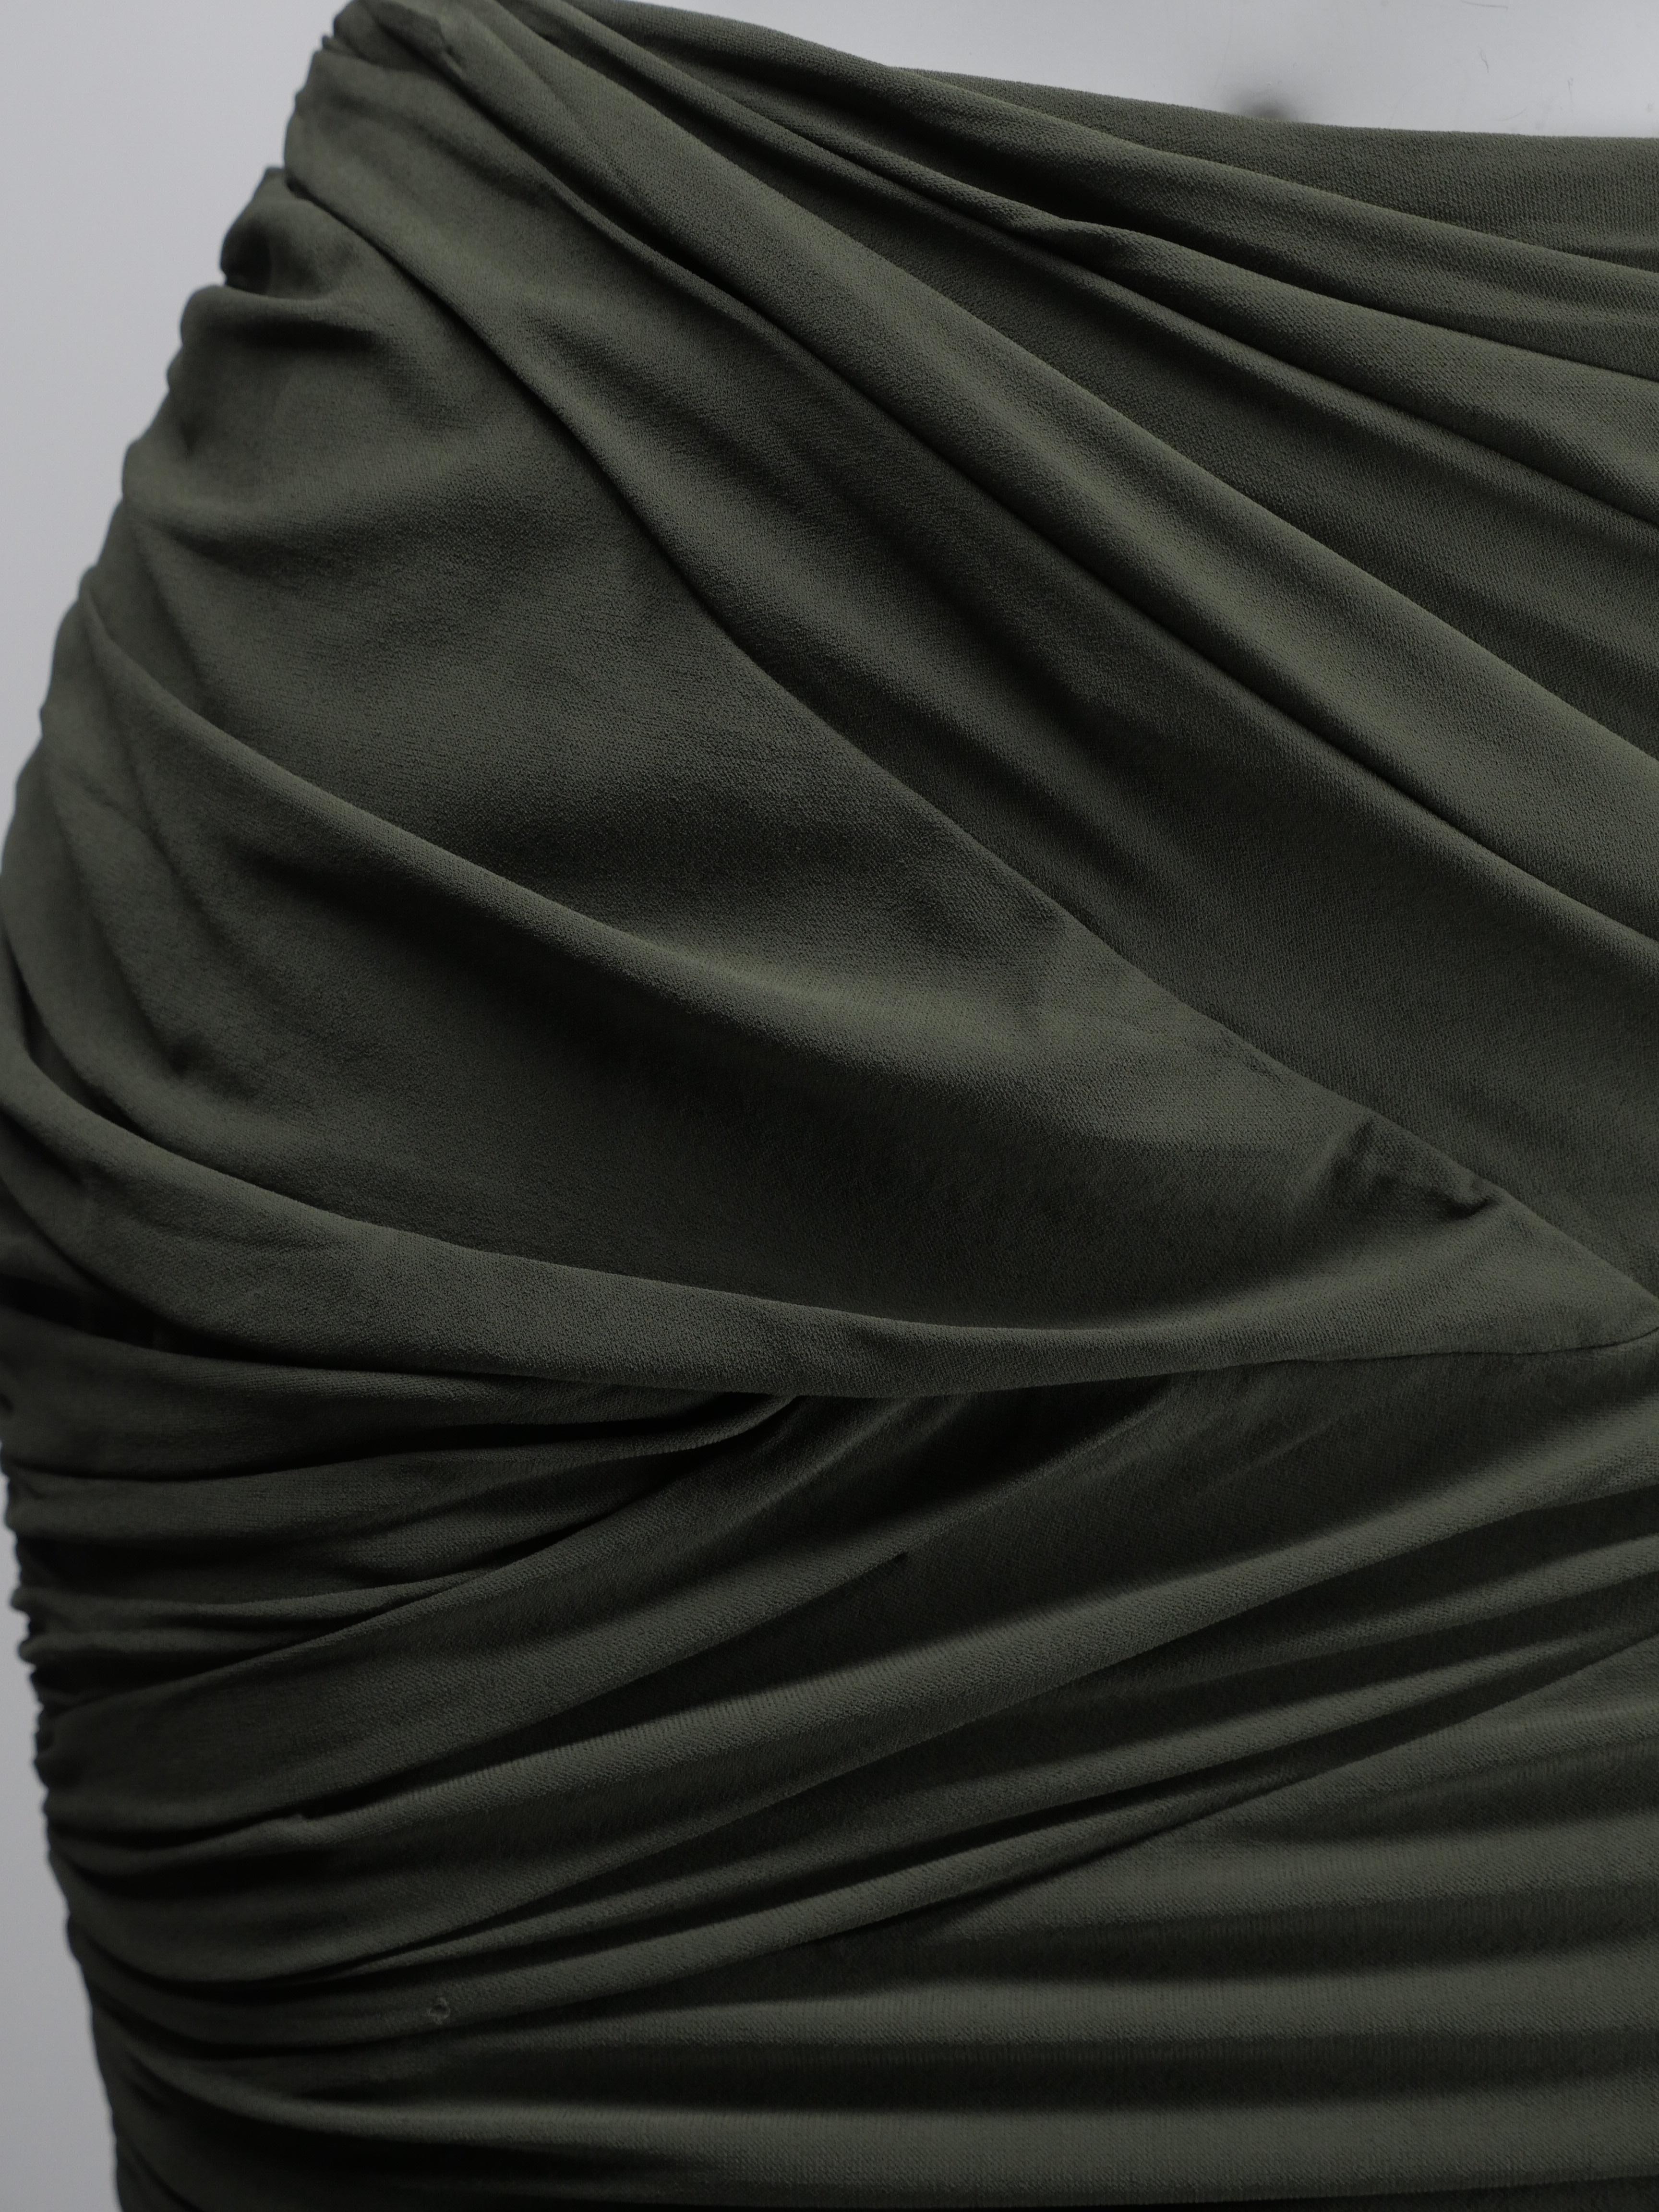 Ralph Lauren Black Label Size 6 Olive Green Ruched Skirt In New Condition In Bridgehampton, NY